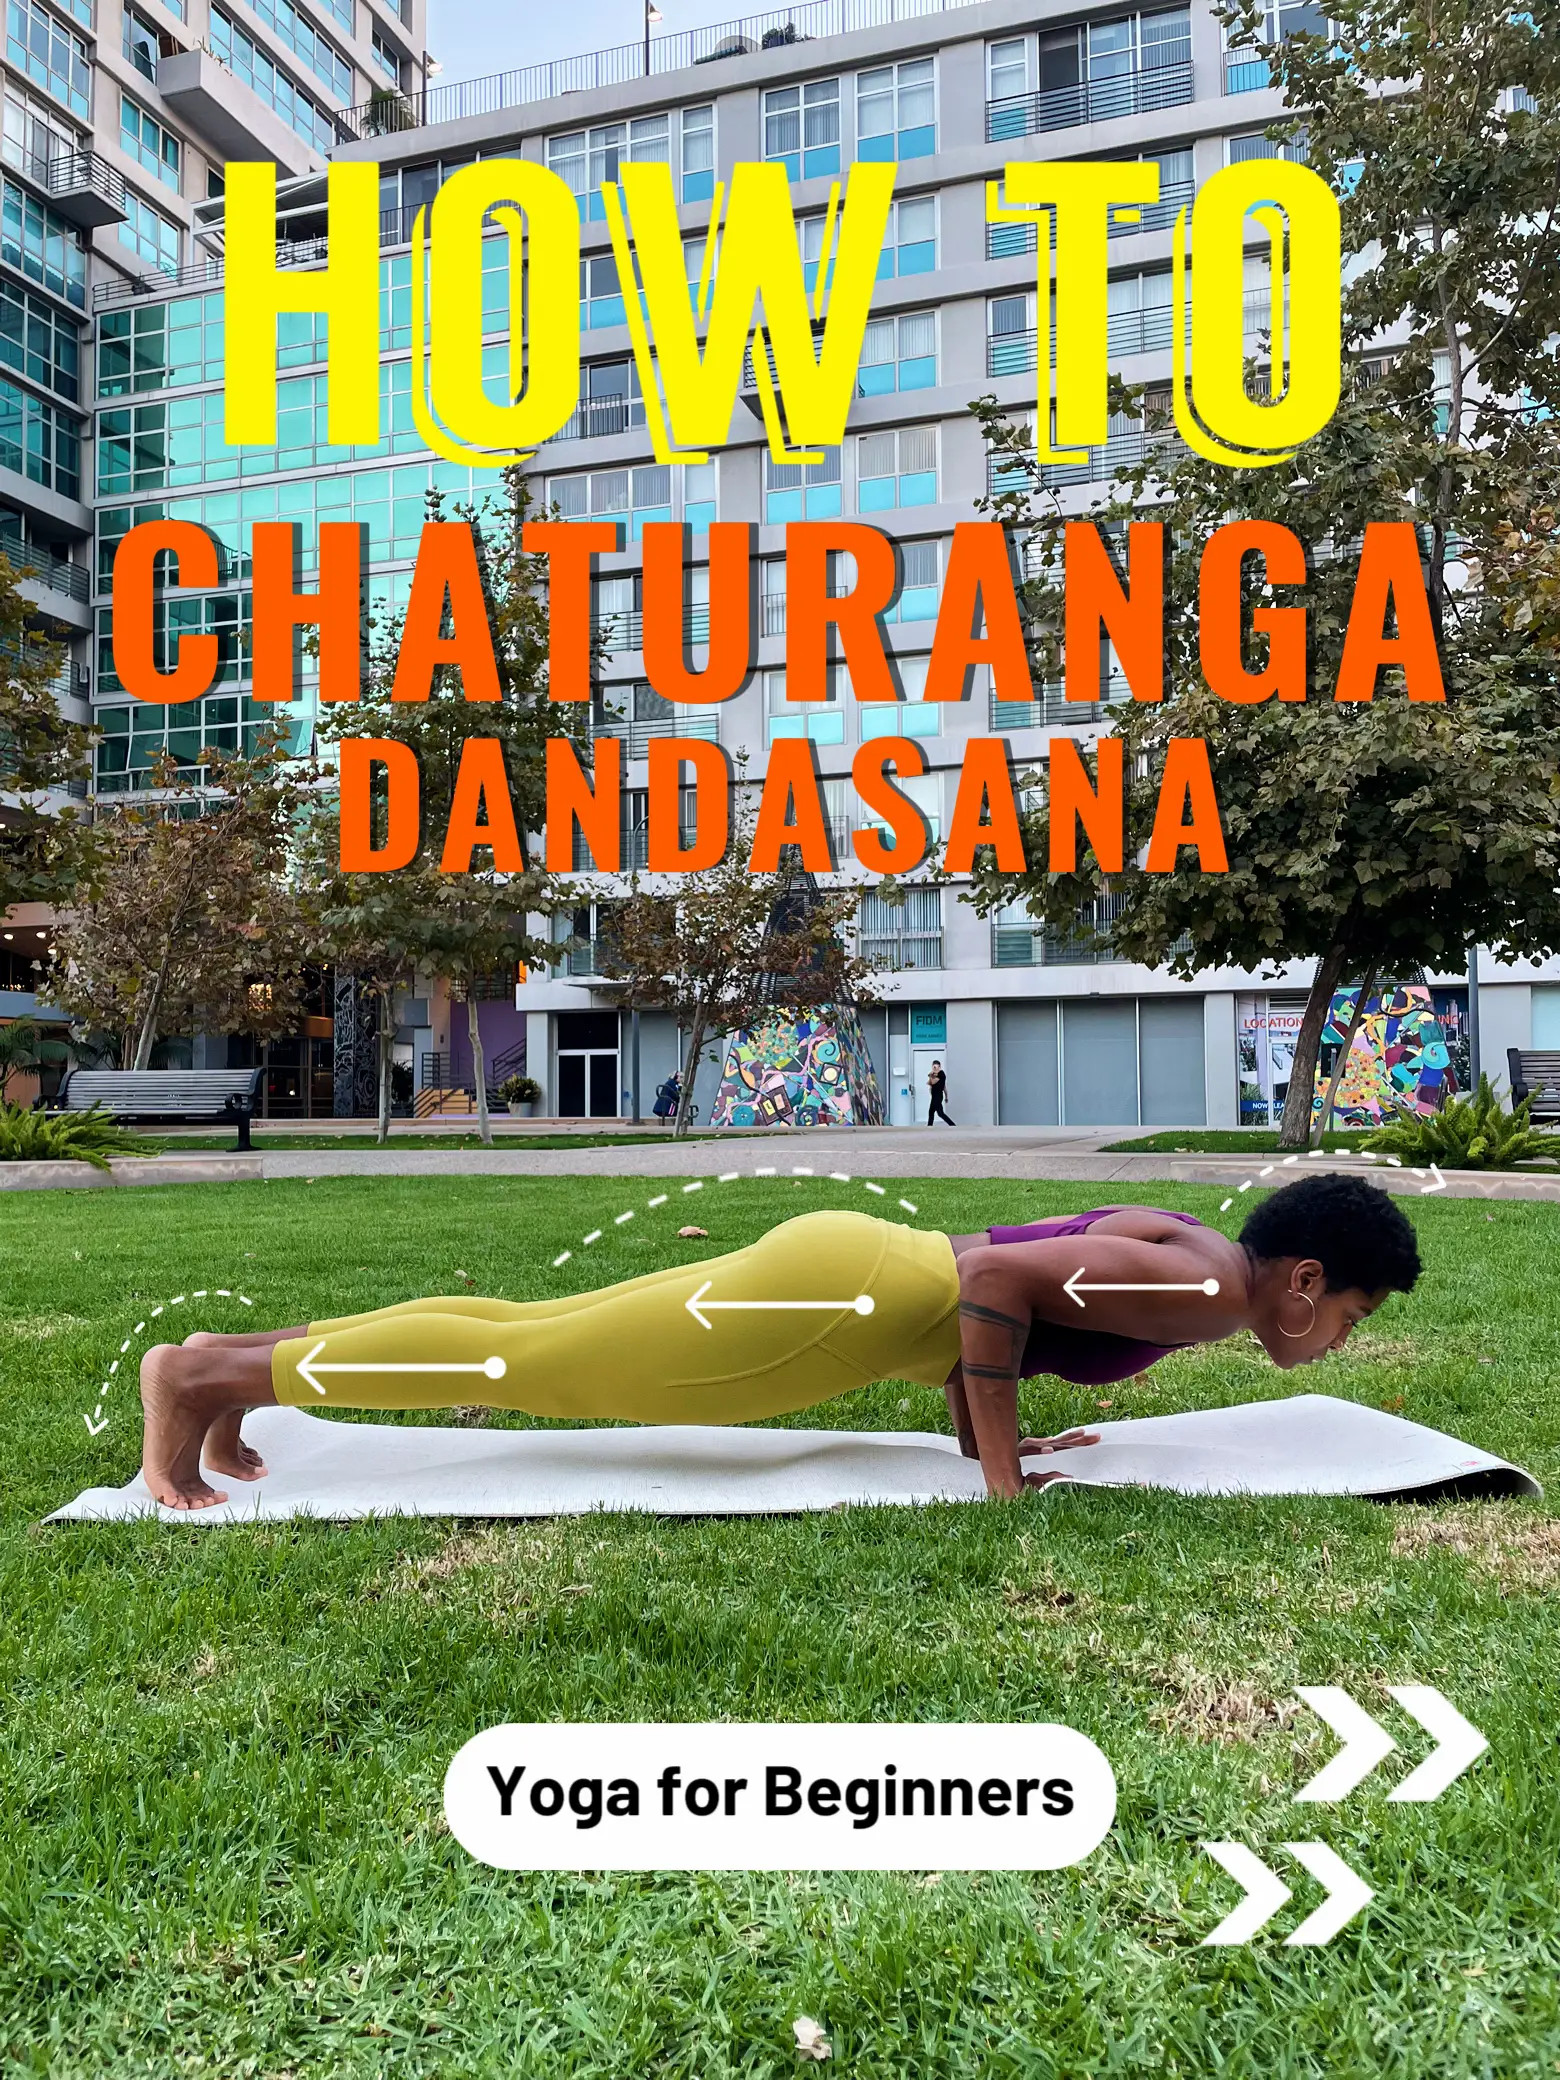 Yoga Basics: Chaturanga and Breath